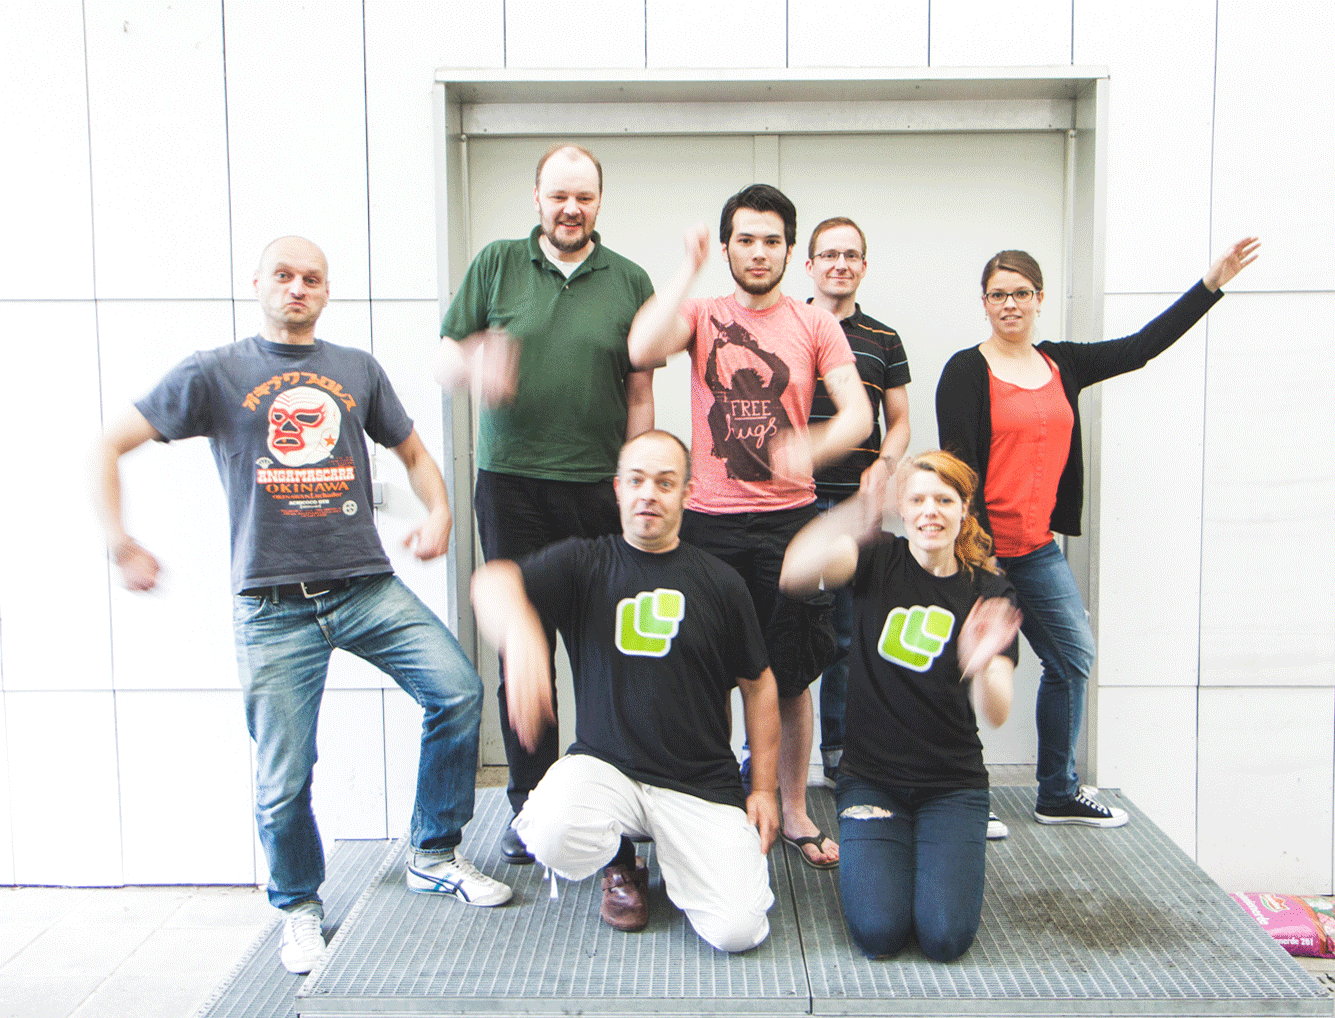 Photograph of Homebrew Website Club participants at the tollwerk hyperloft in Nuremberg